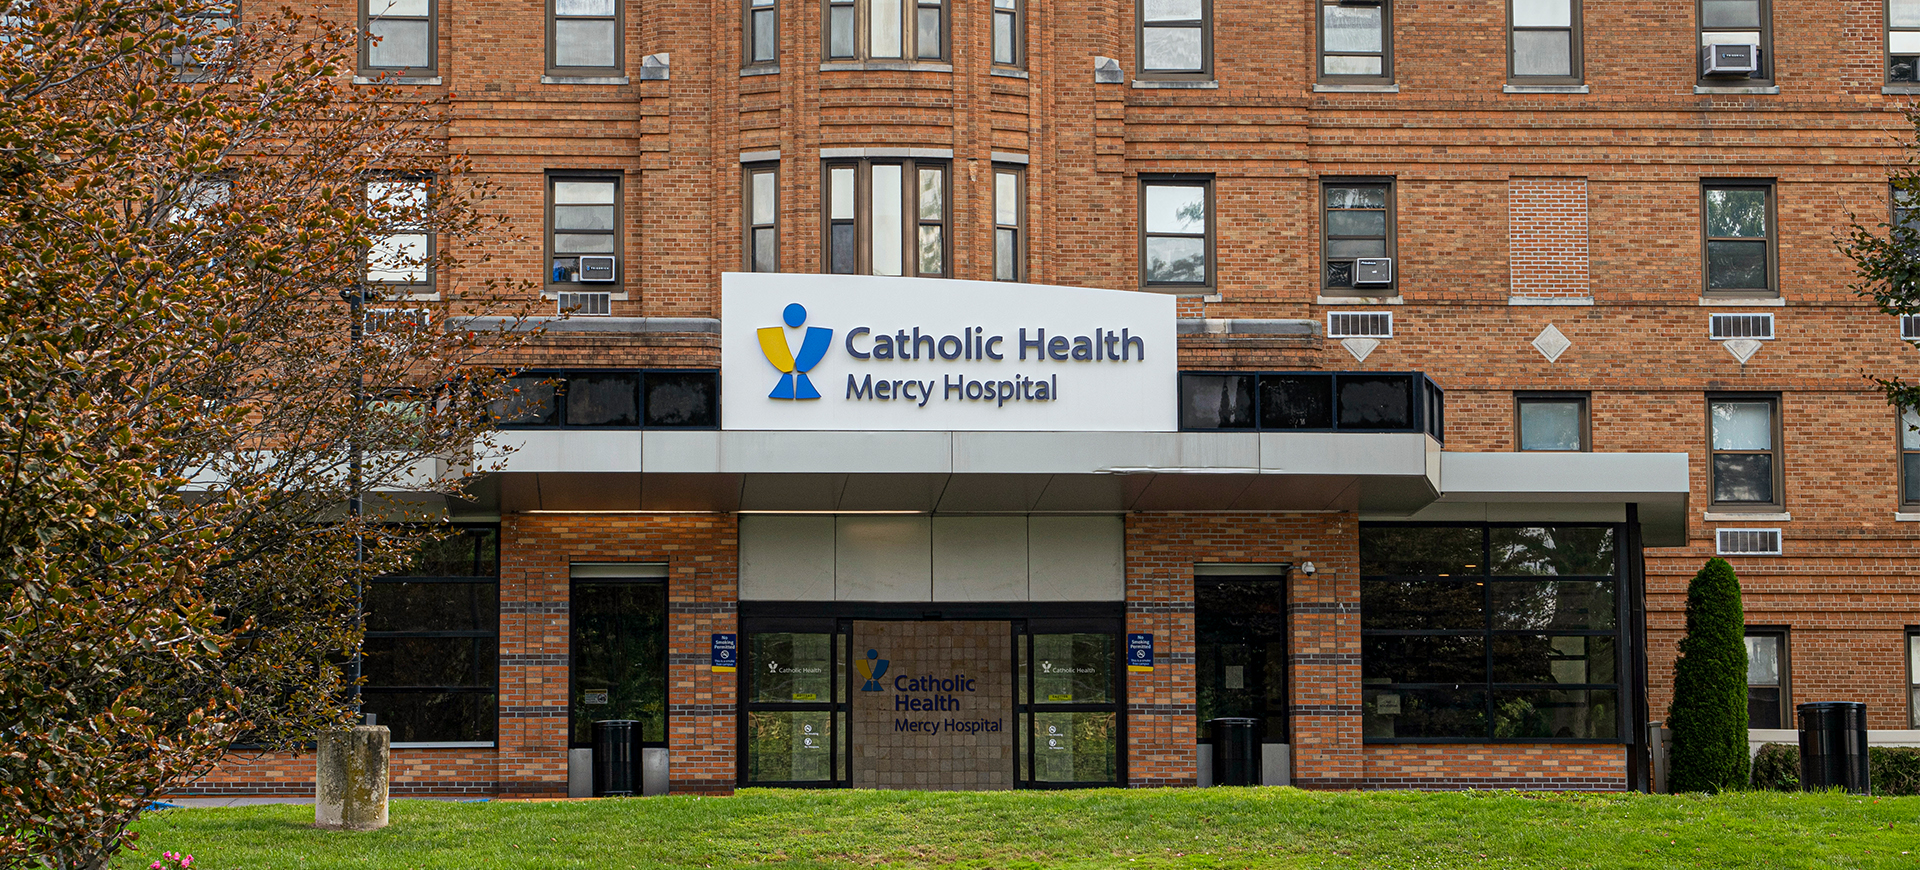       	        
	  	  Mercy Hospital Radiology
	  	  
	        